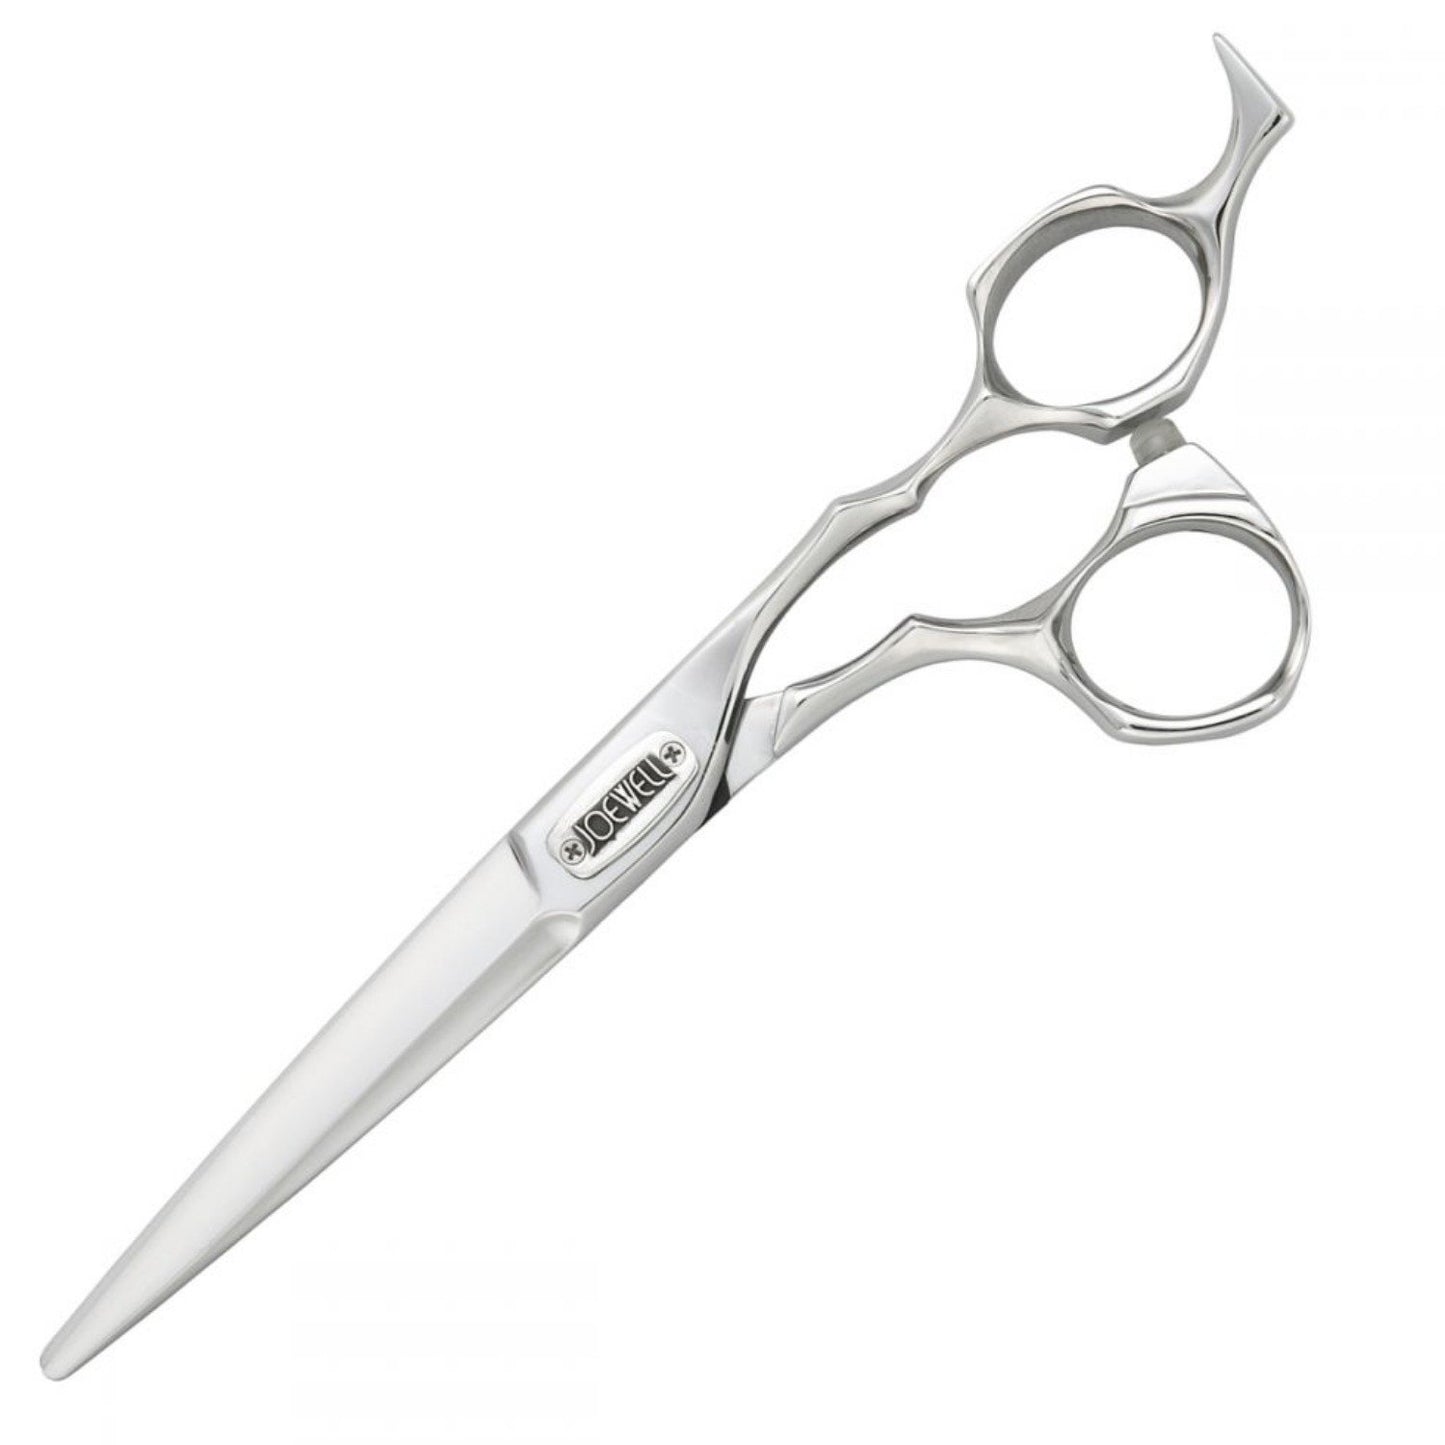 Joewell Craft Hairdressing Scissors CR-610 6.1 Inch